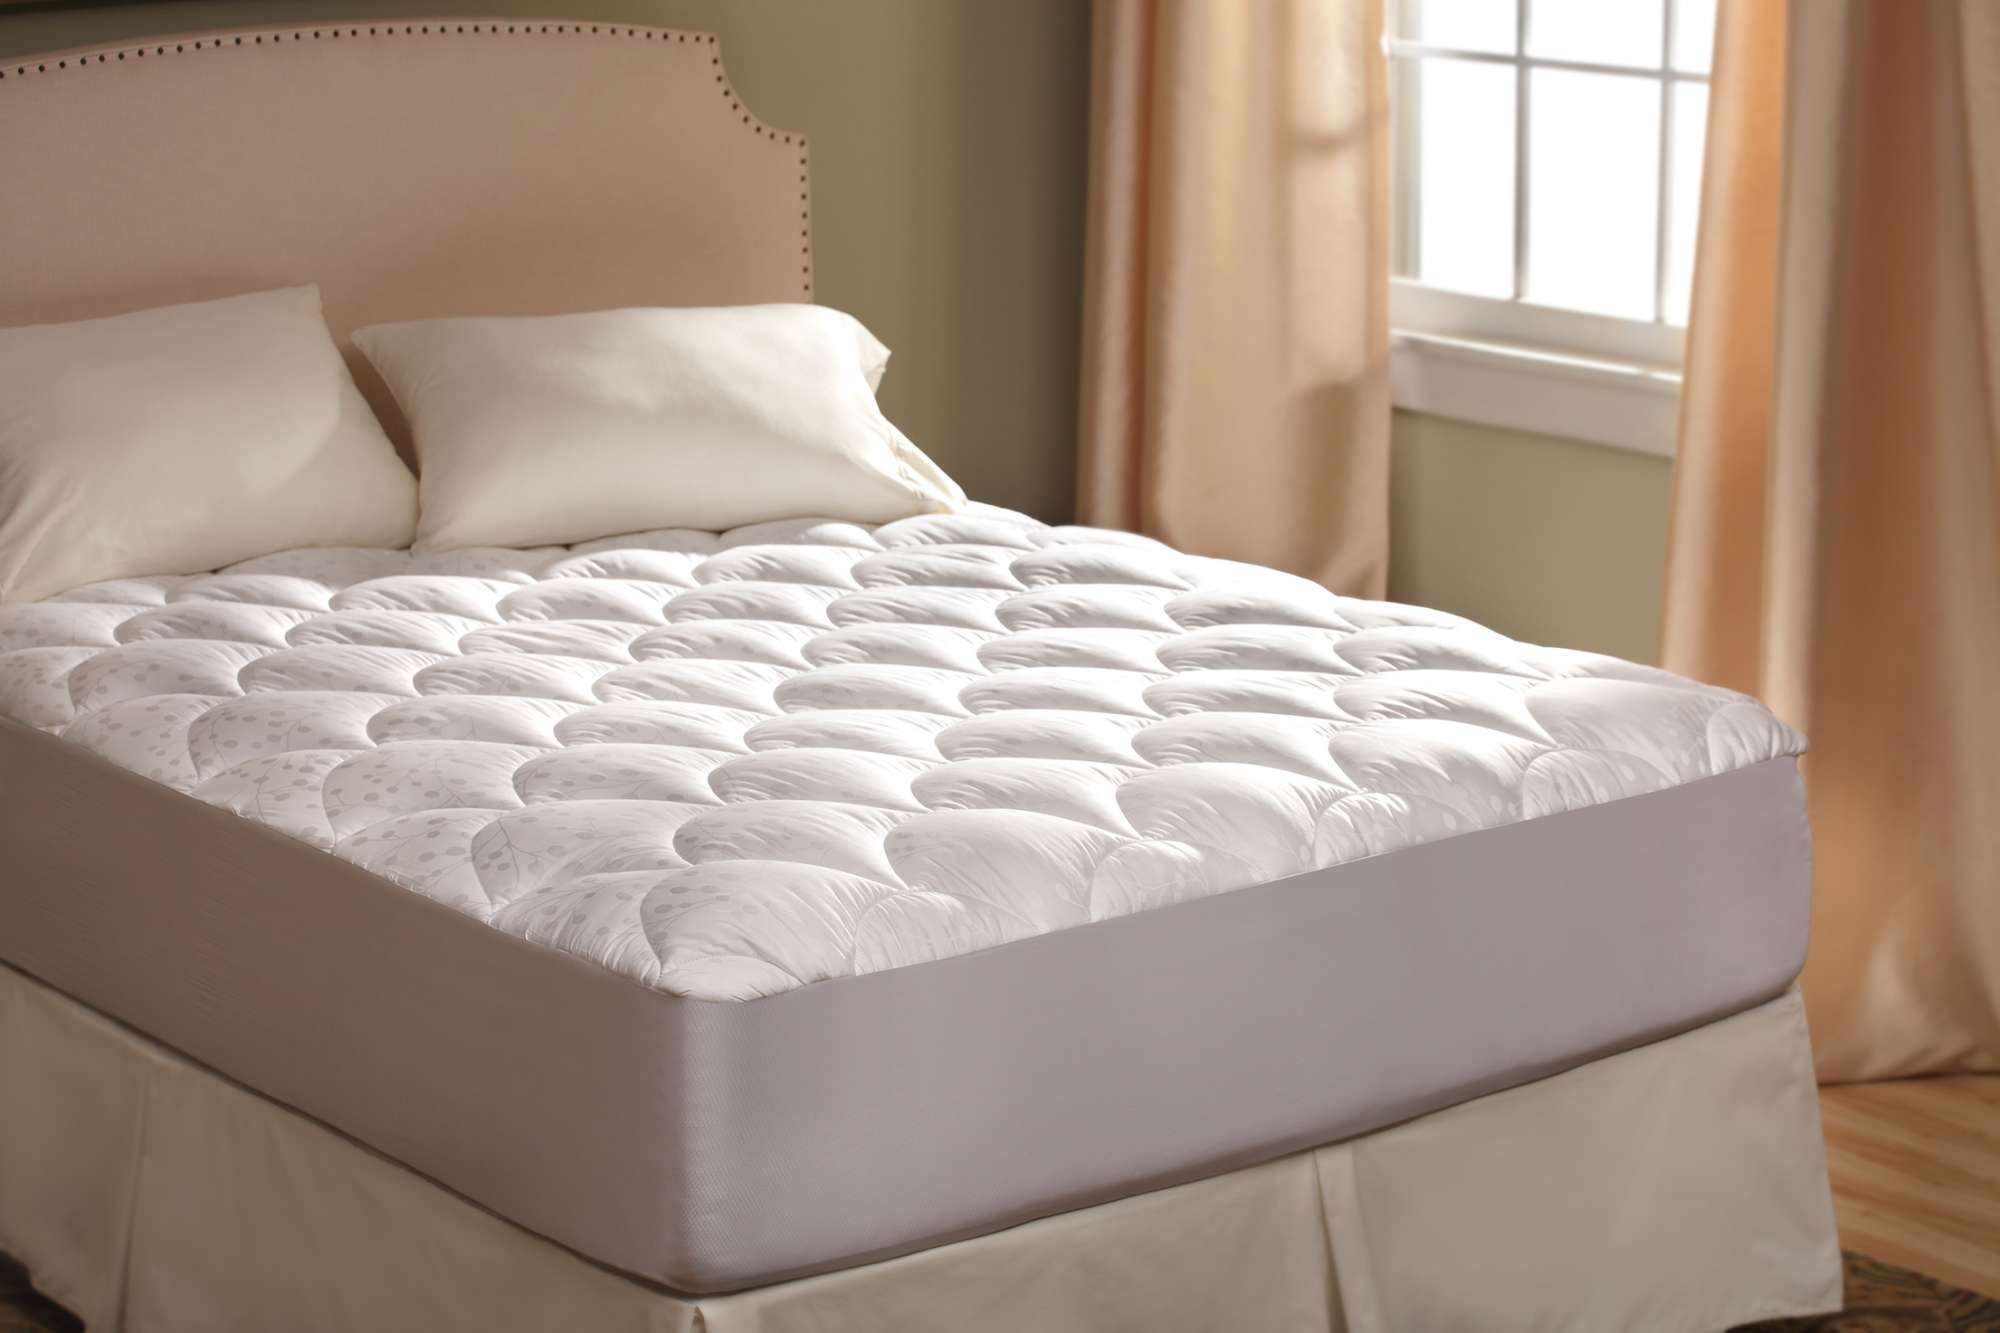 160 x 80 mattress protector